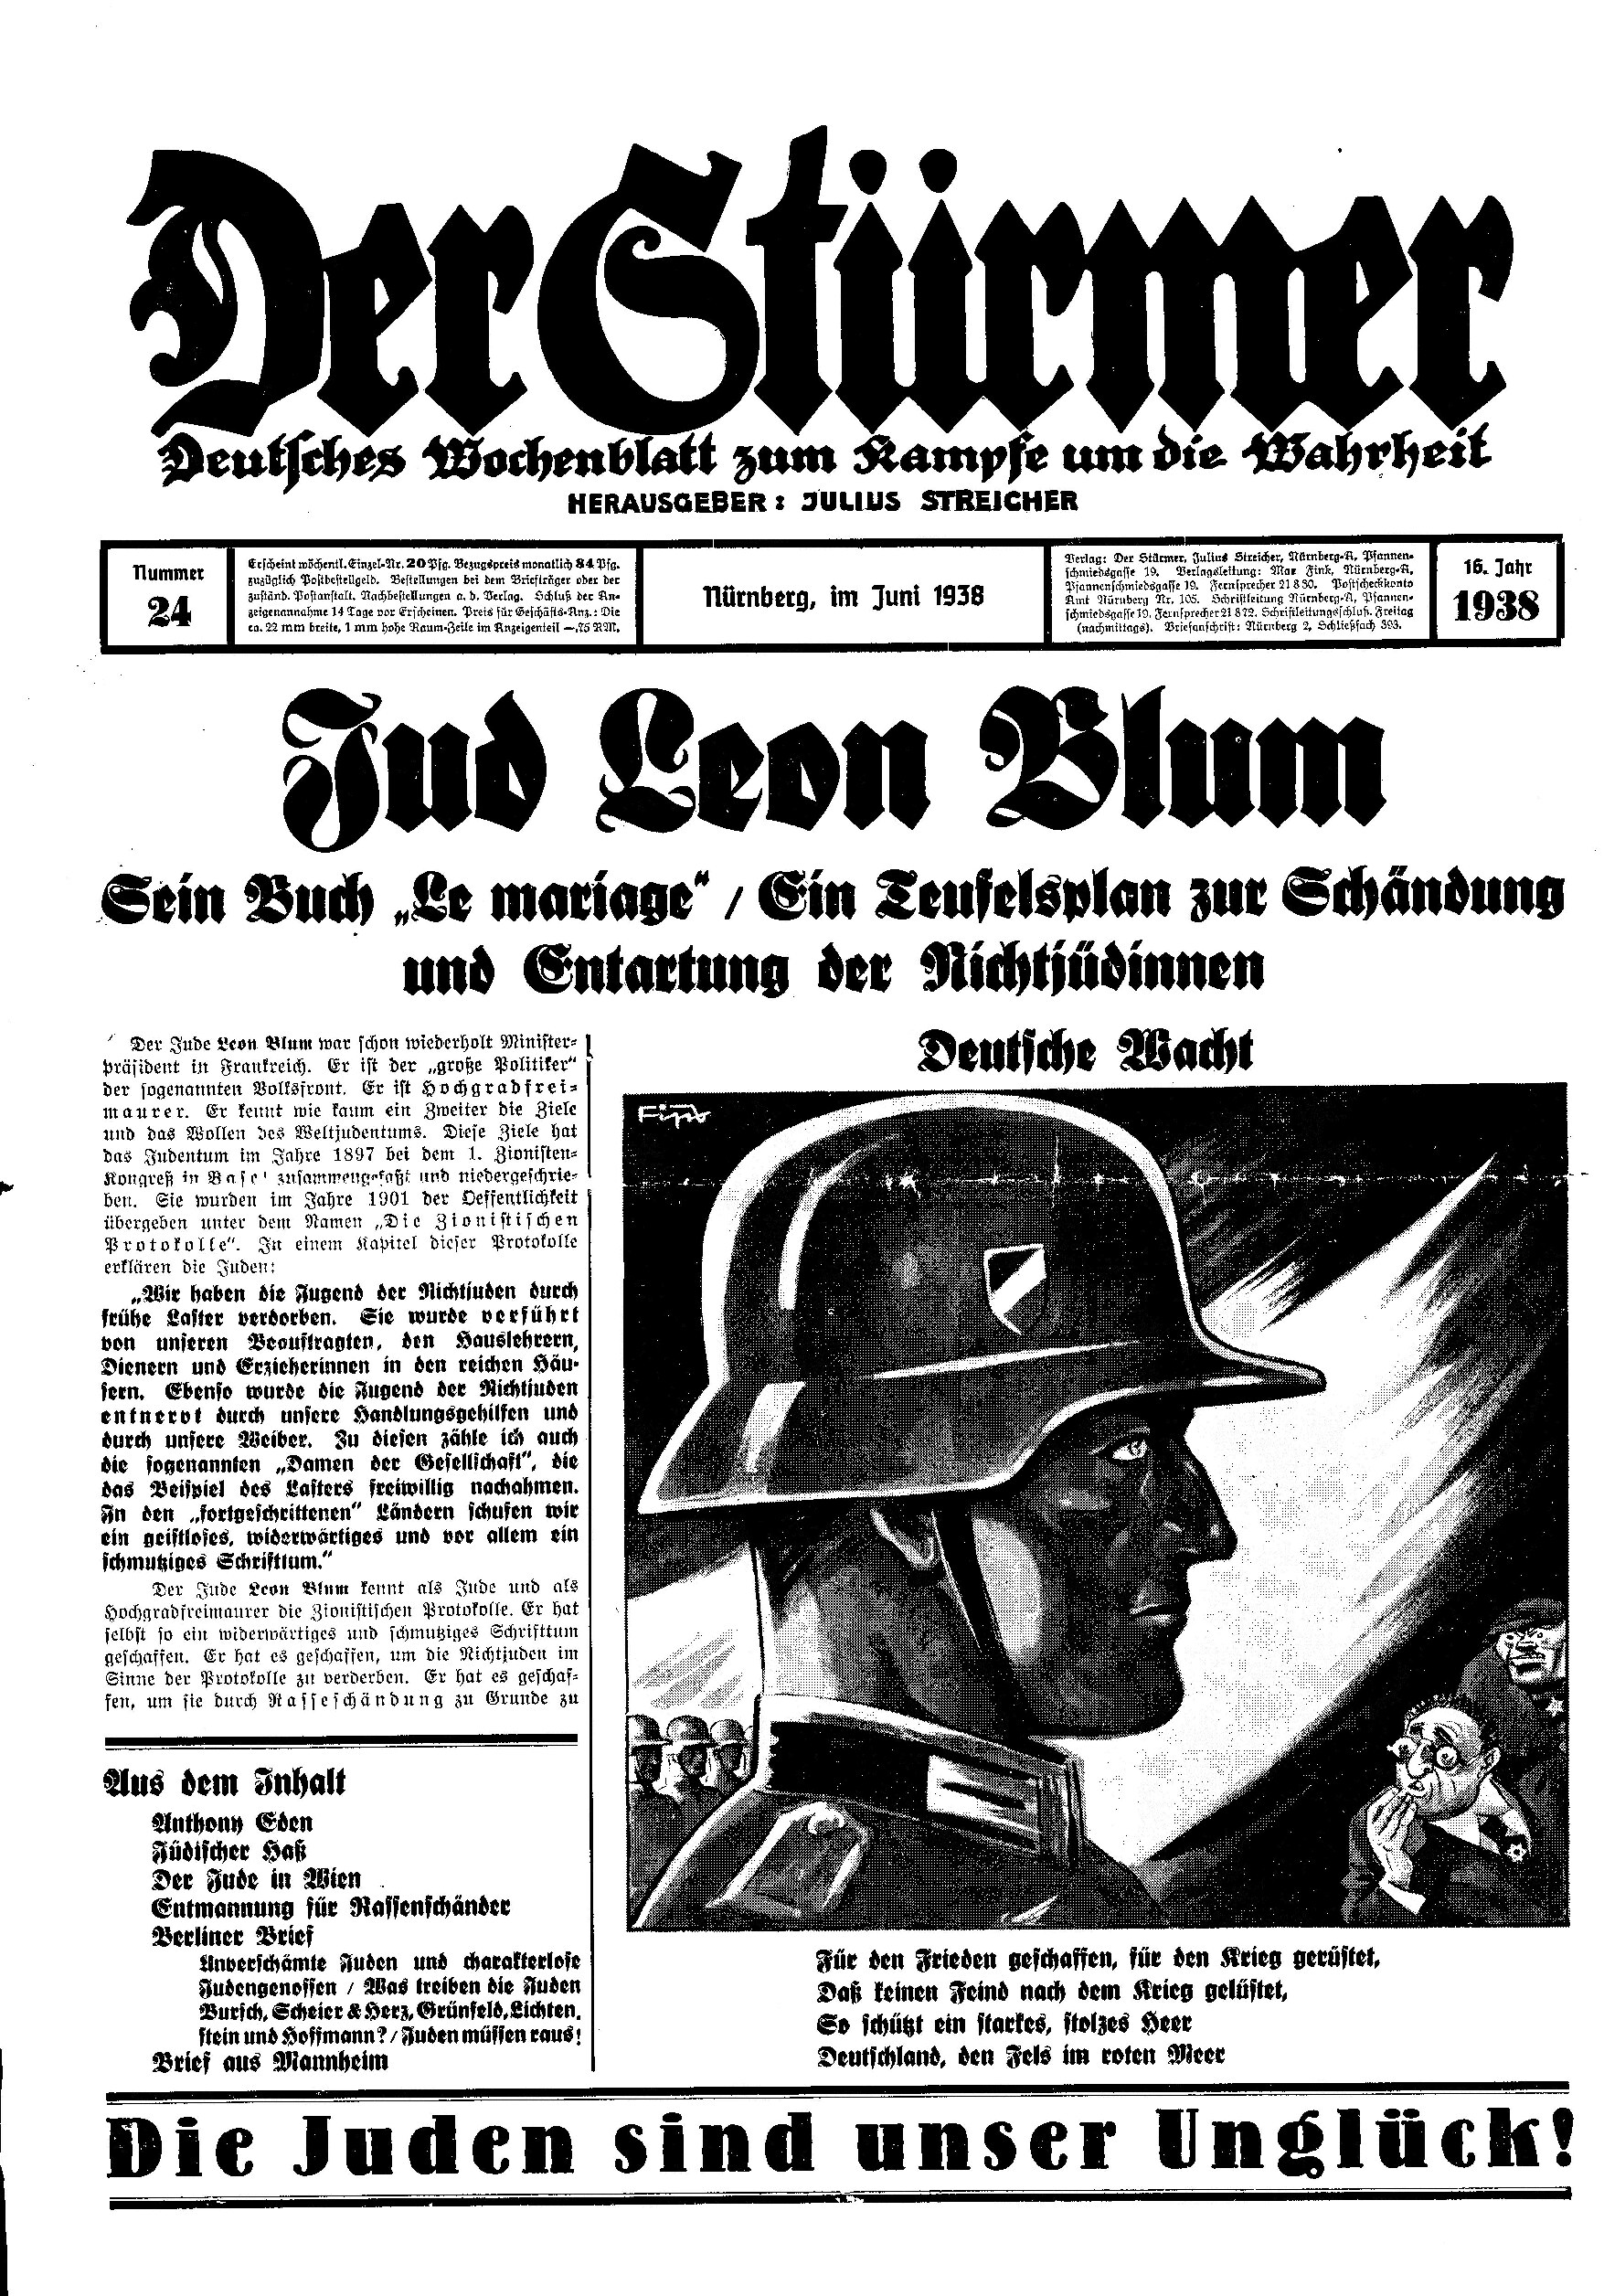 Der Stürmer - 1938 Nr. 24 - Jud Leon Blum